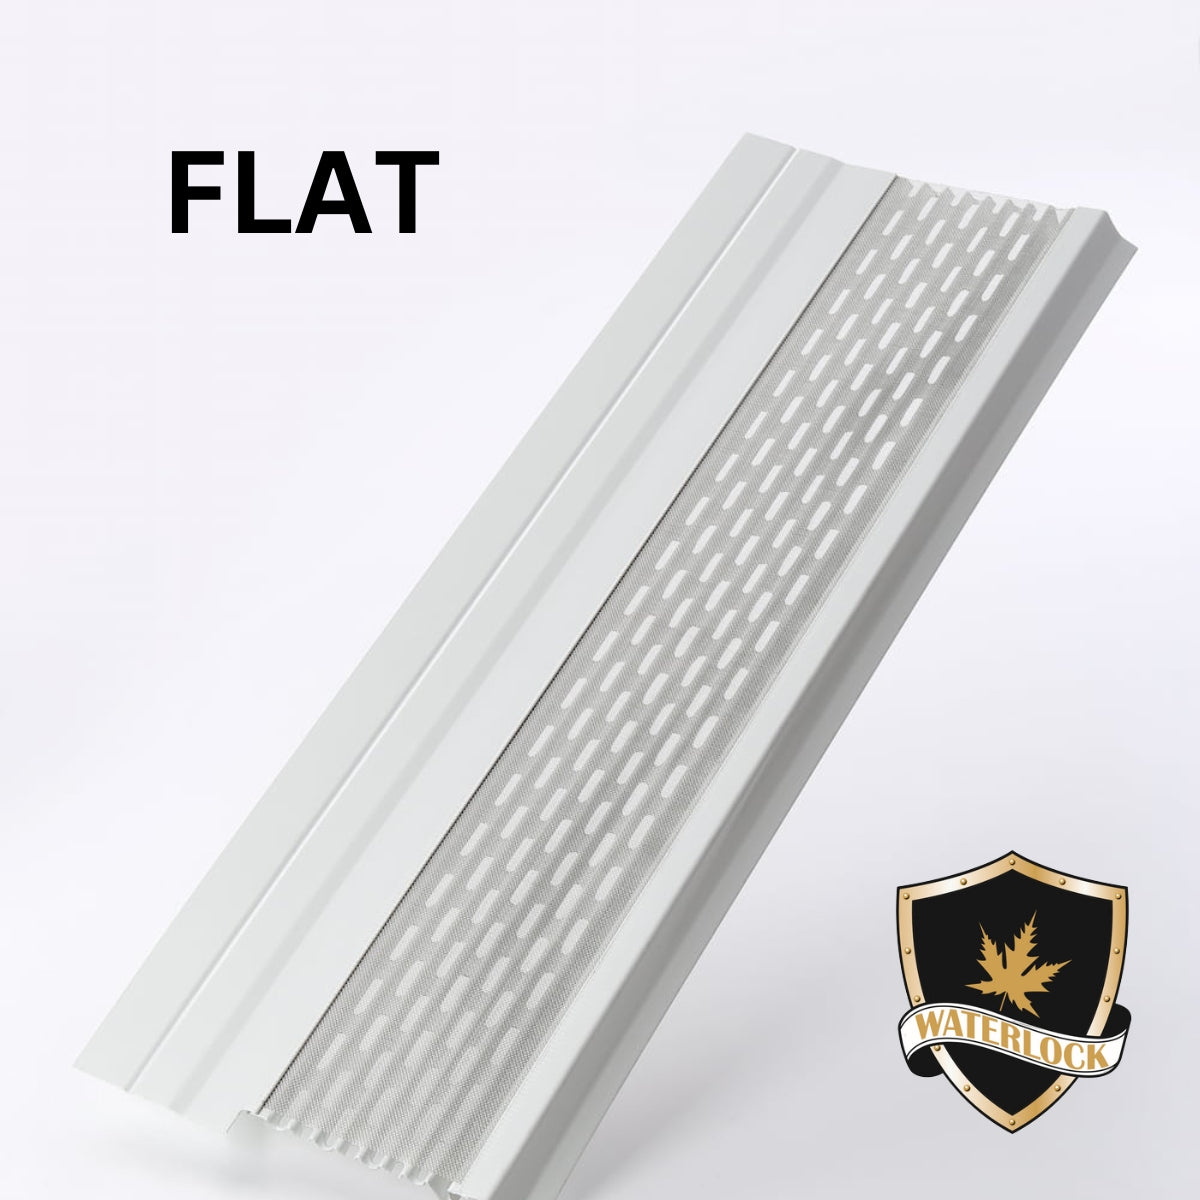 FLAT Micromesh Gutter Guards - White - $5.56 per ft